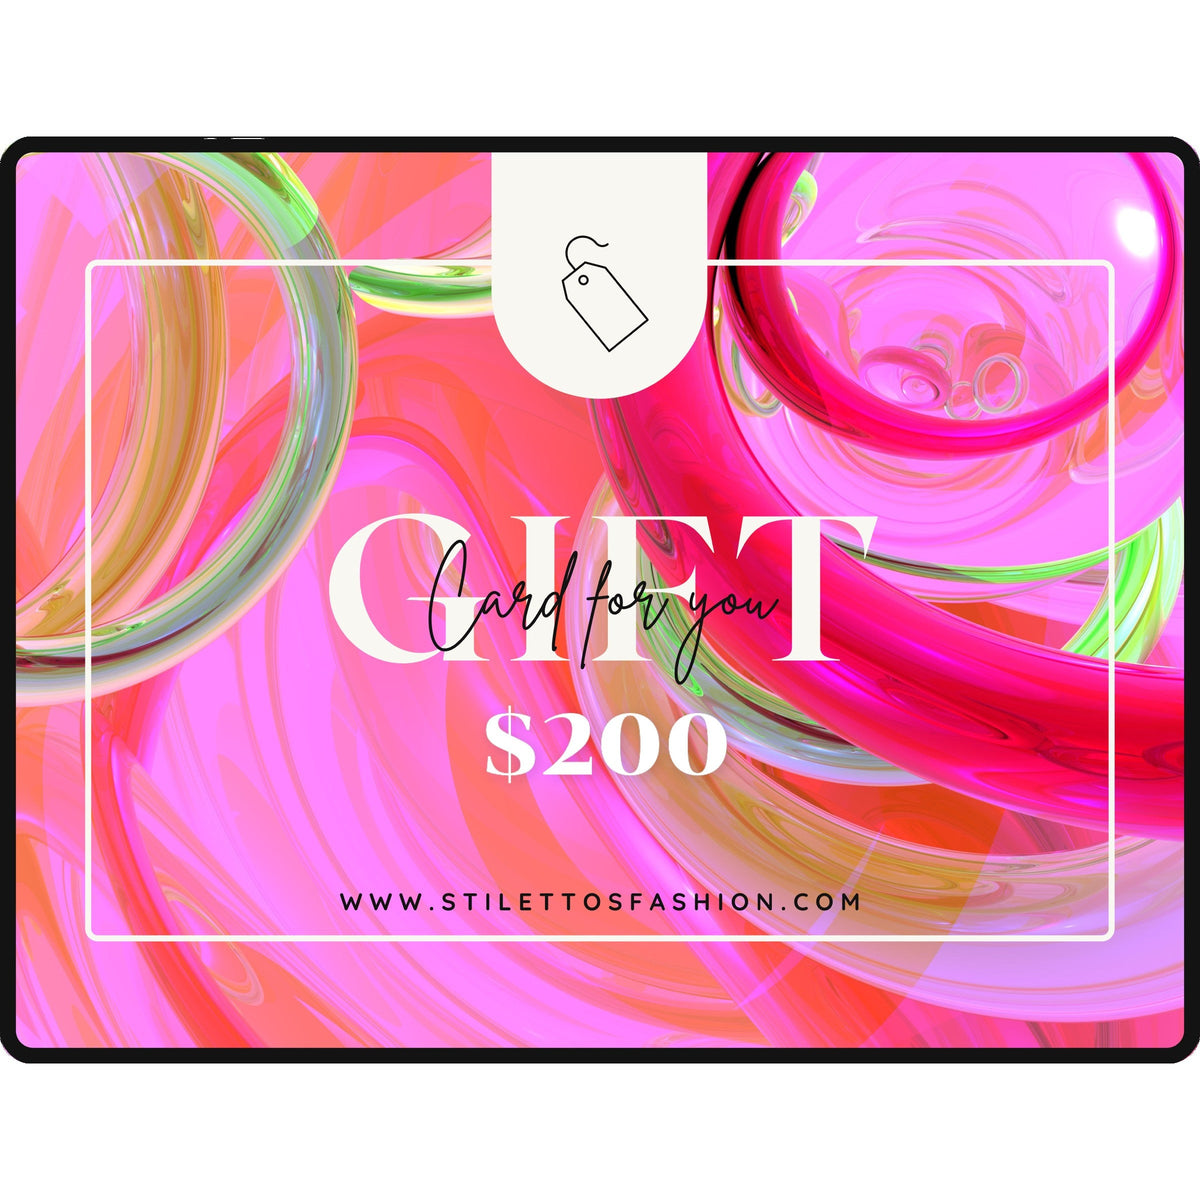 Gift Card $200 Stilettoskop - "Where The Pretty Girls Shop"